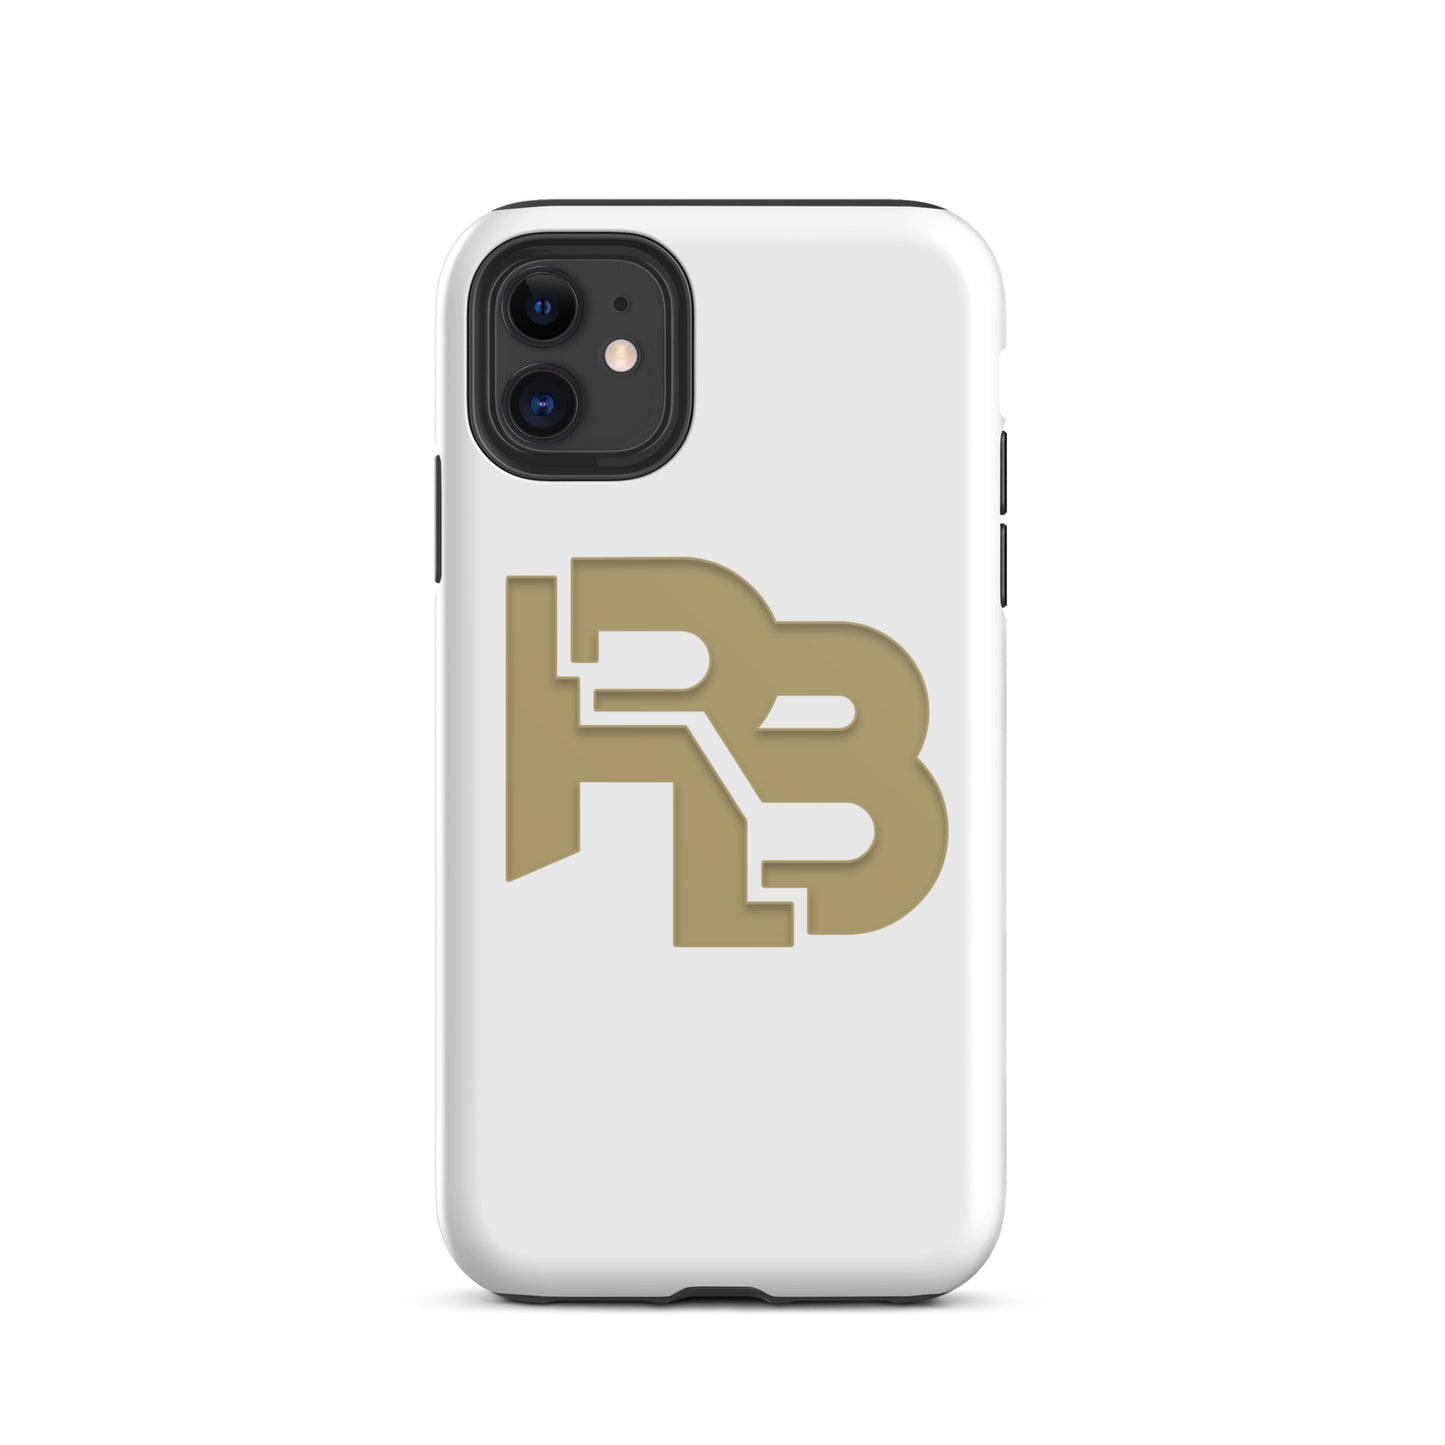 RB Tough iPhone case